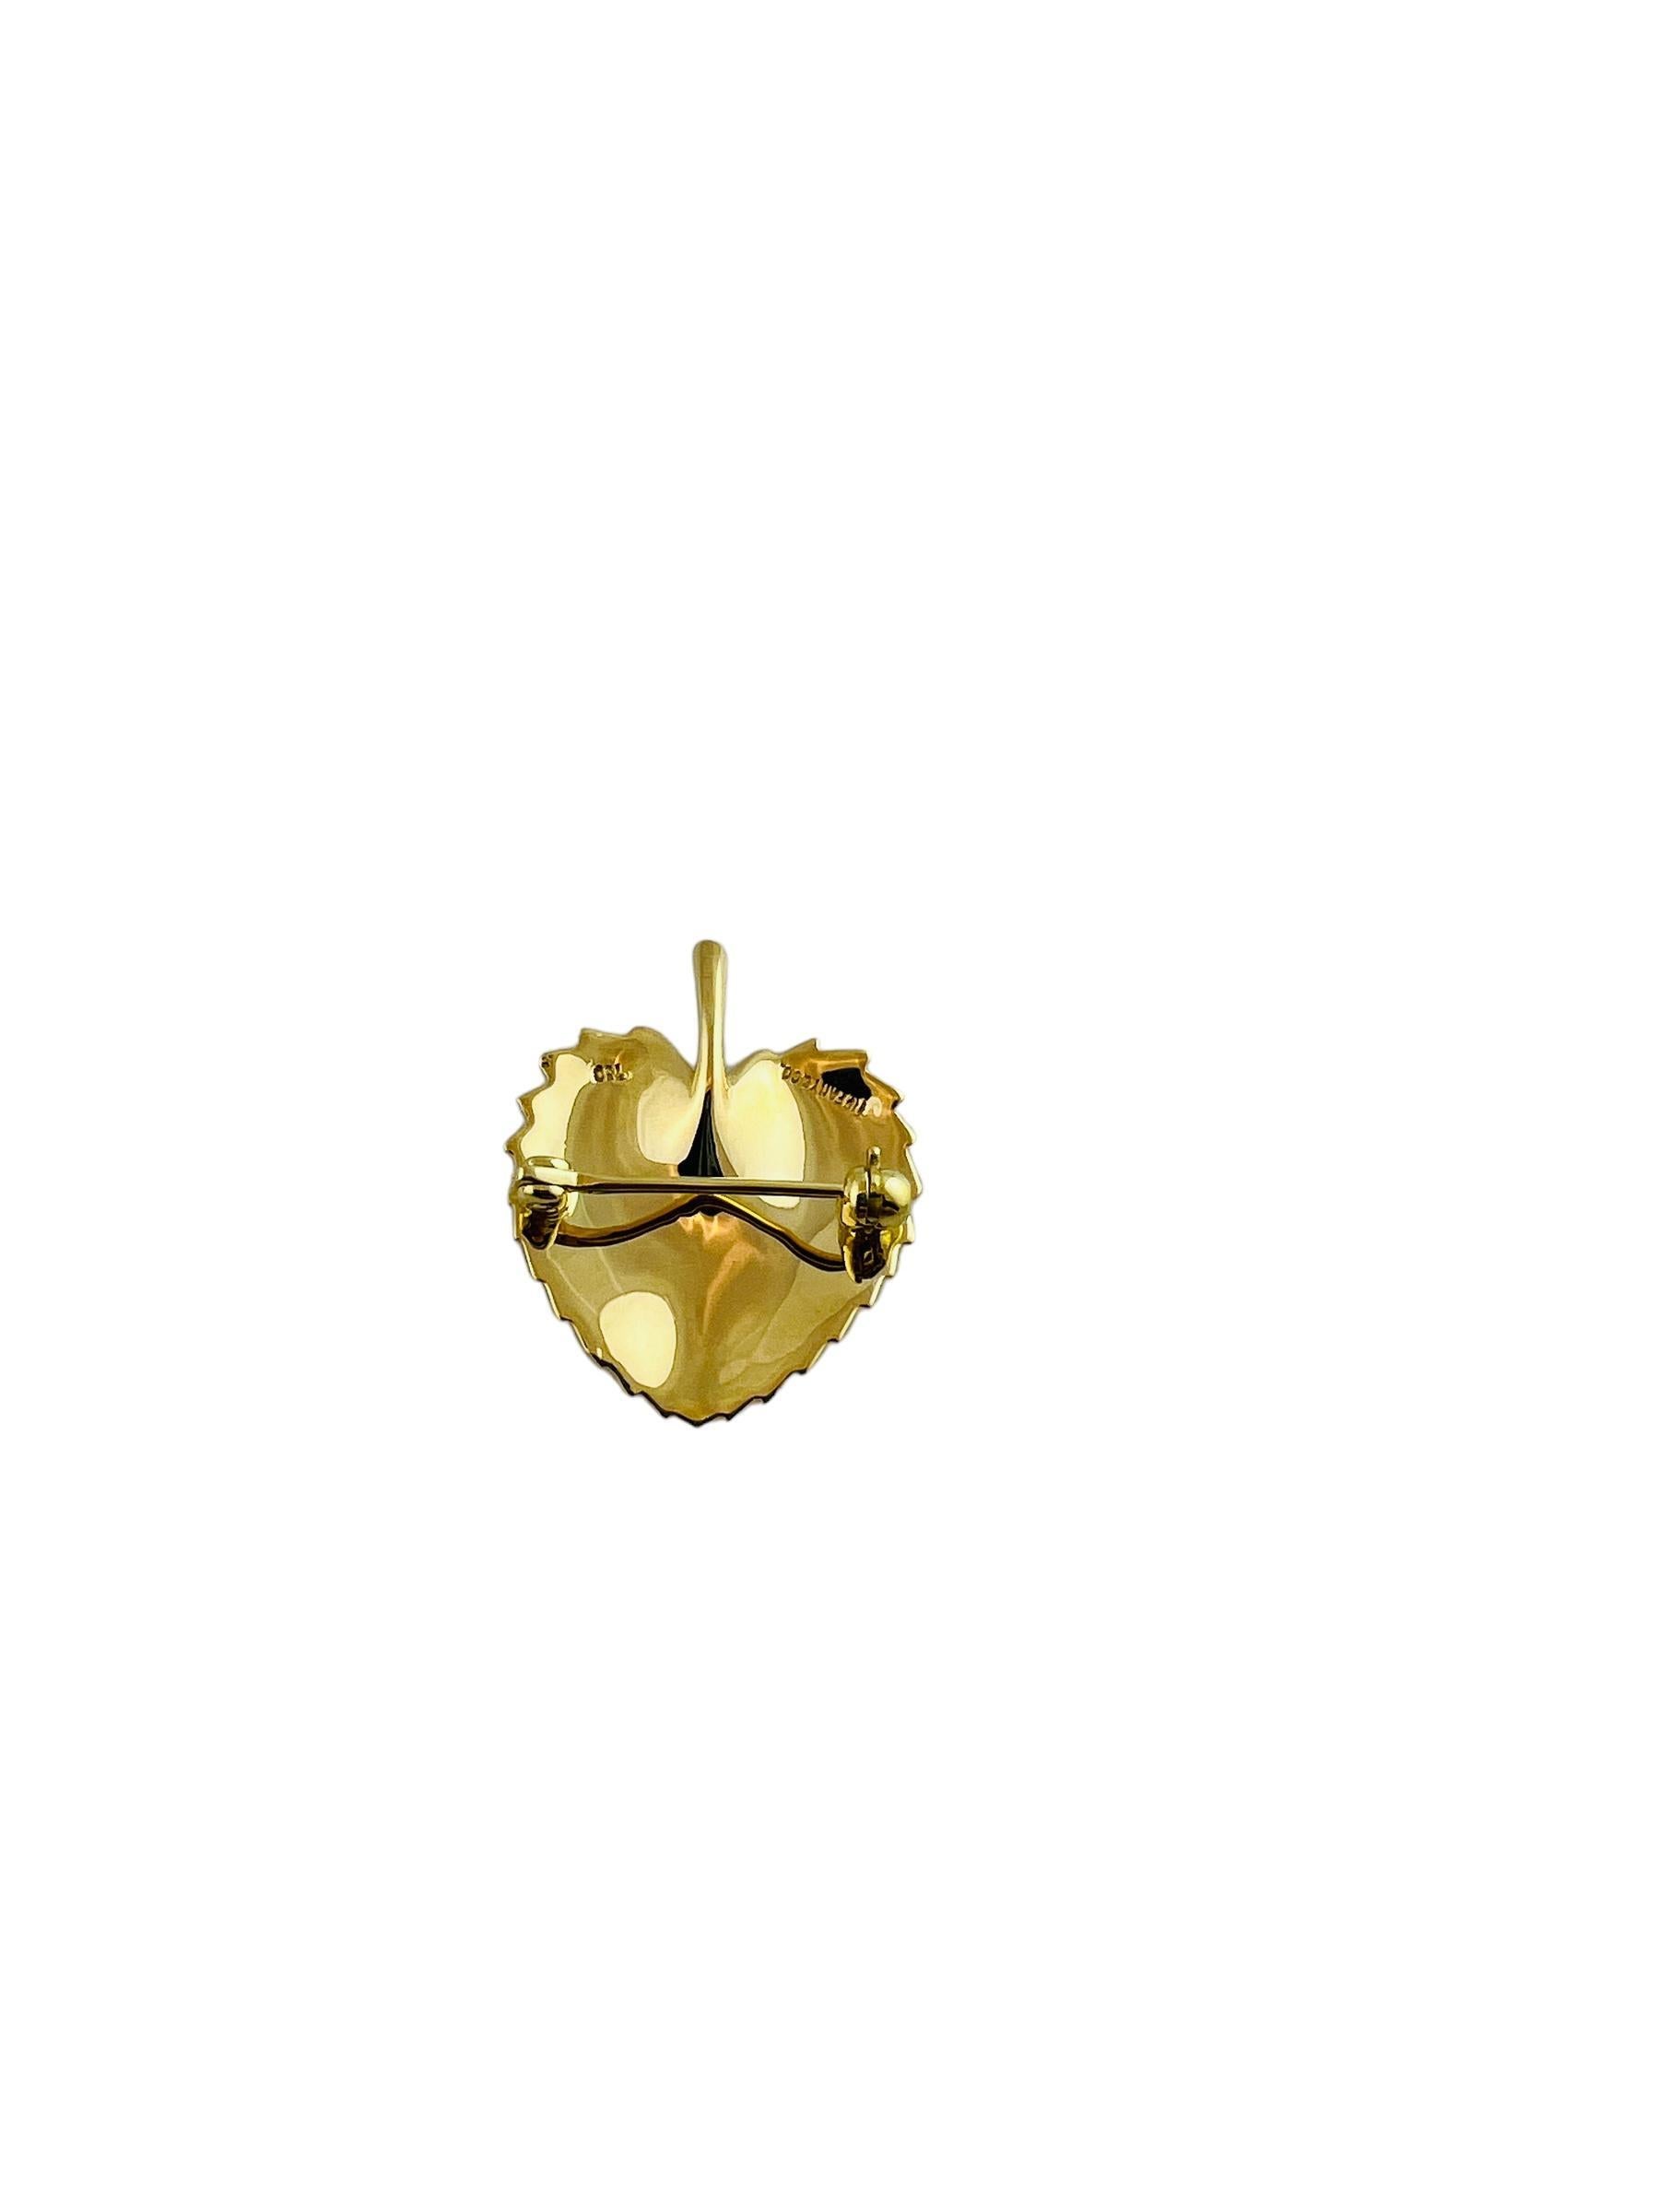 1960's Tiffany & Co. 18K Yellow Gold Aspen Leaf Brooch Pin w pouch #15449 2